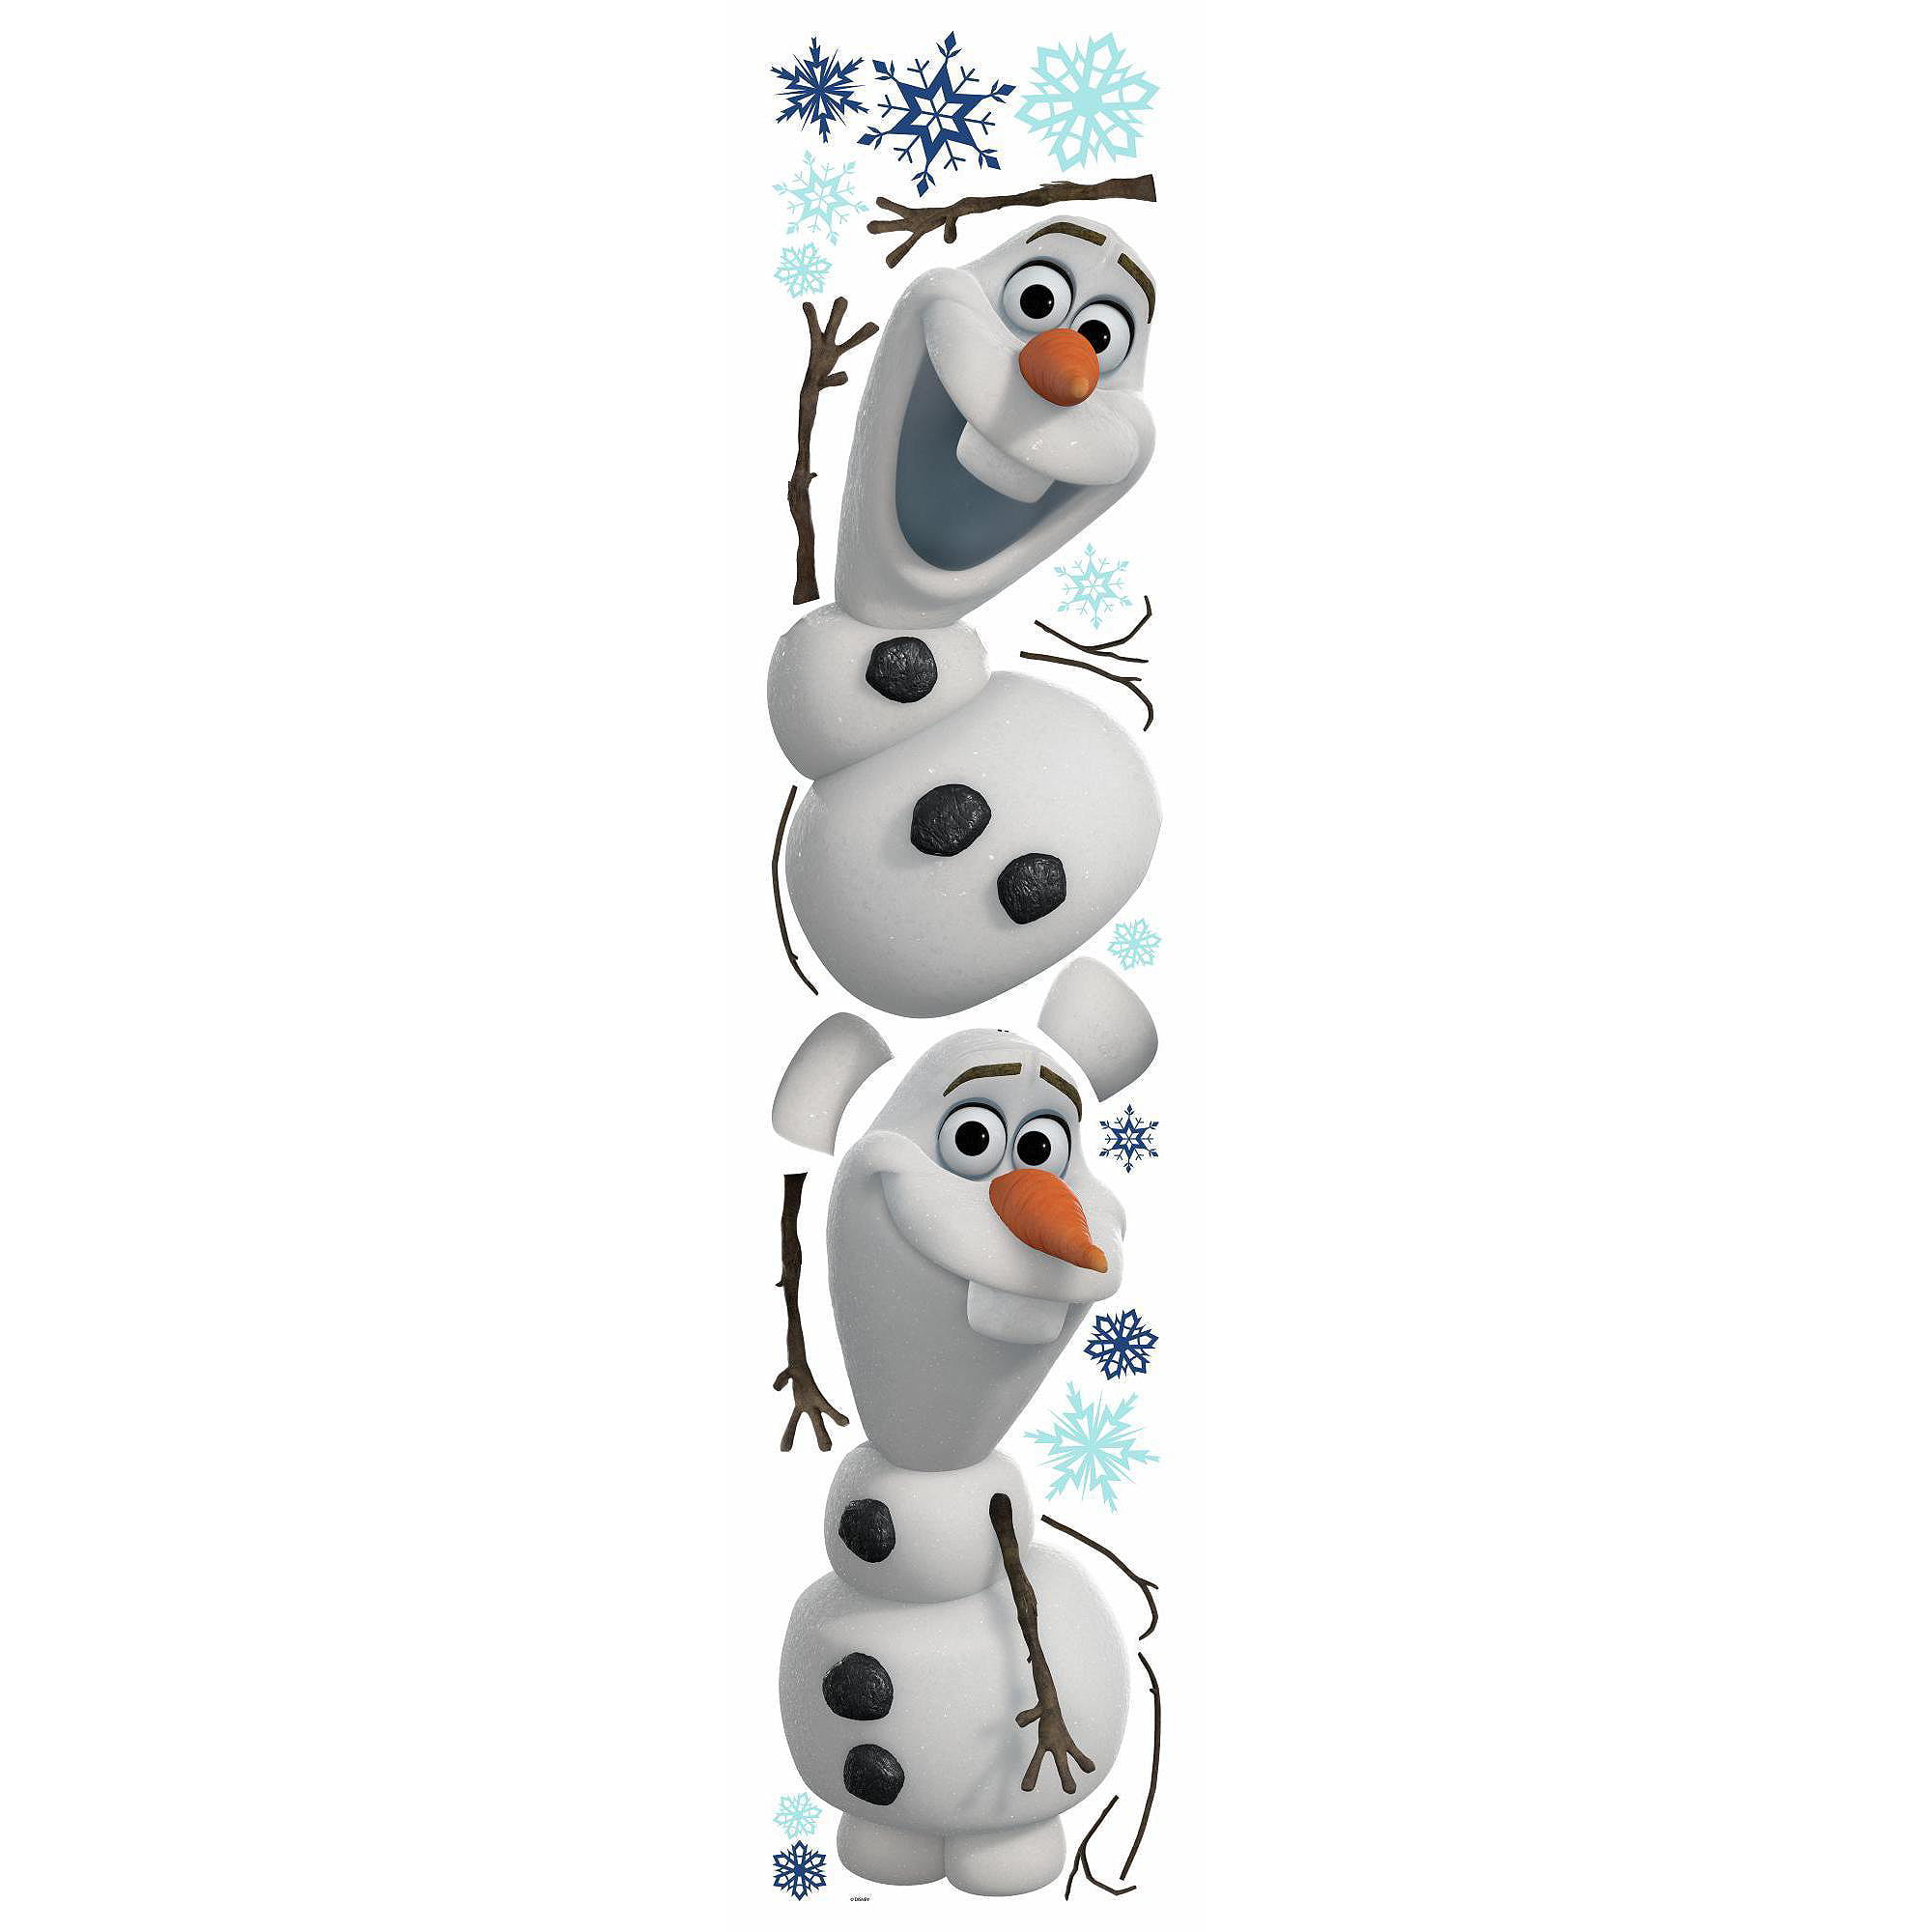 Window Wall Vehicle Display Christmas Frozen Olaf Snowman Decal Vinyl Sticker a